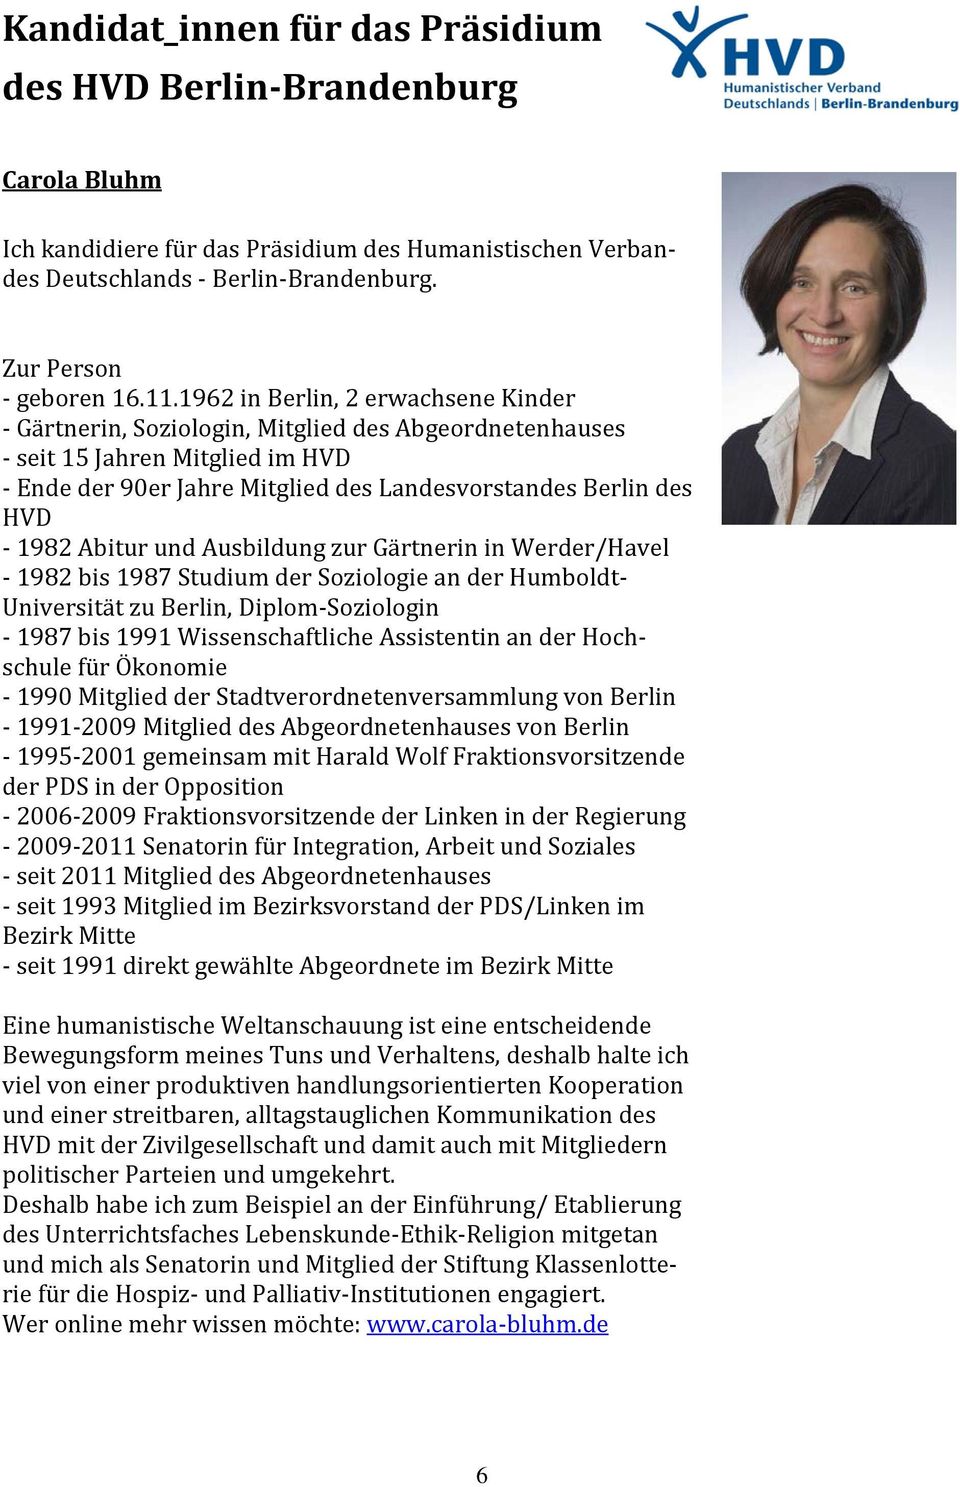 Kandidat Innen Fur Das Prasidium Des Hvd Berlin Brandenburg Dr